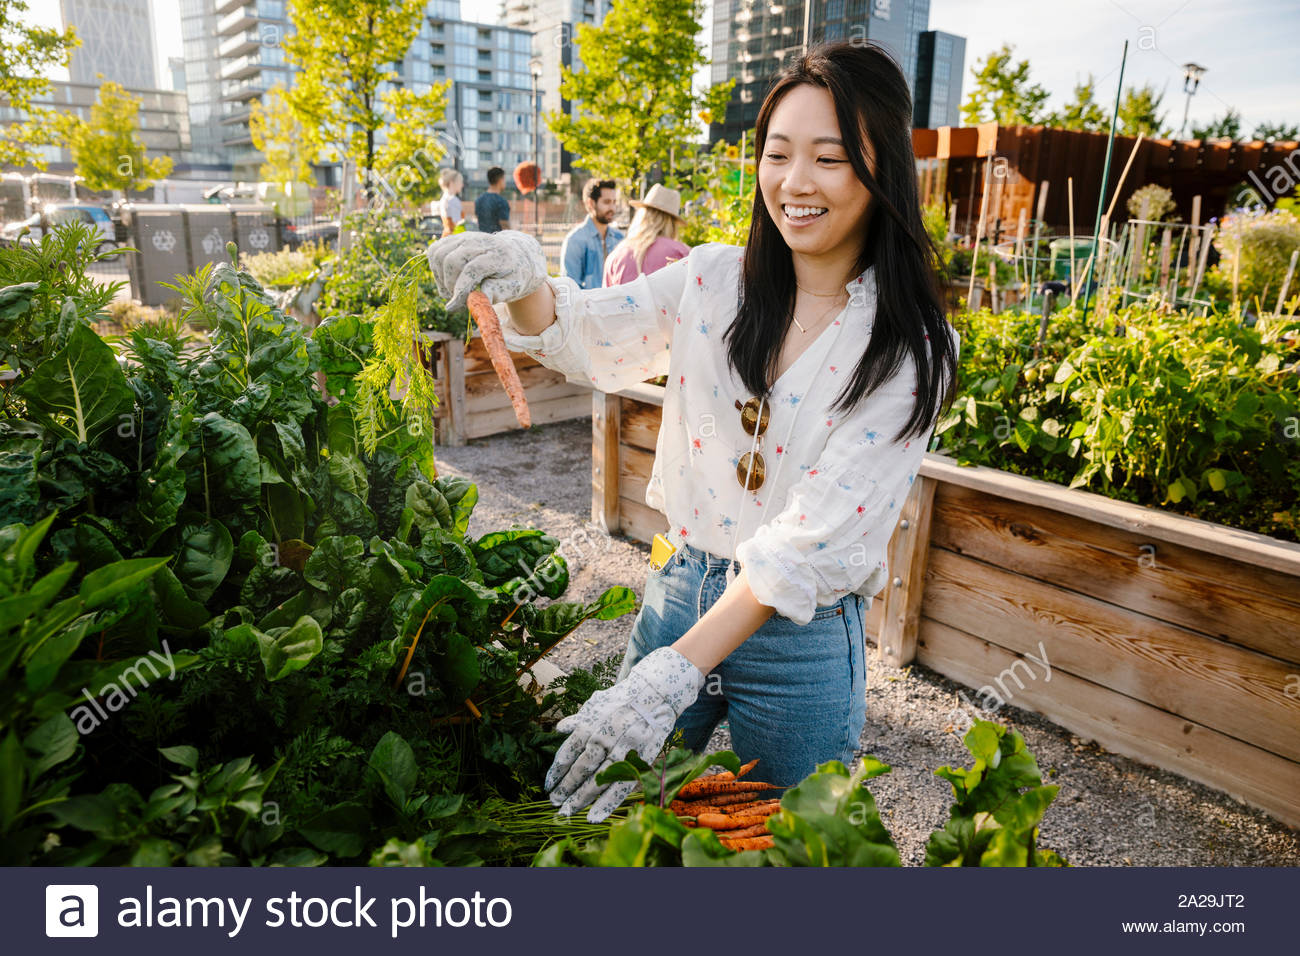 Happy young woman harvesting fresh carrots in urban community garden Stock Photo